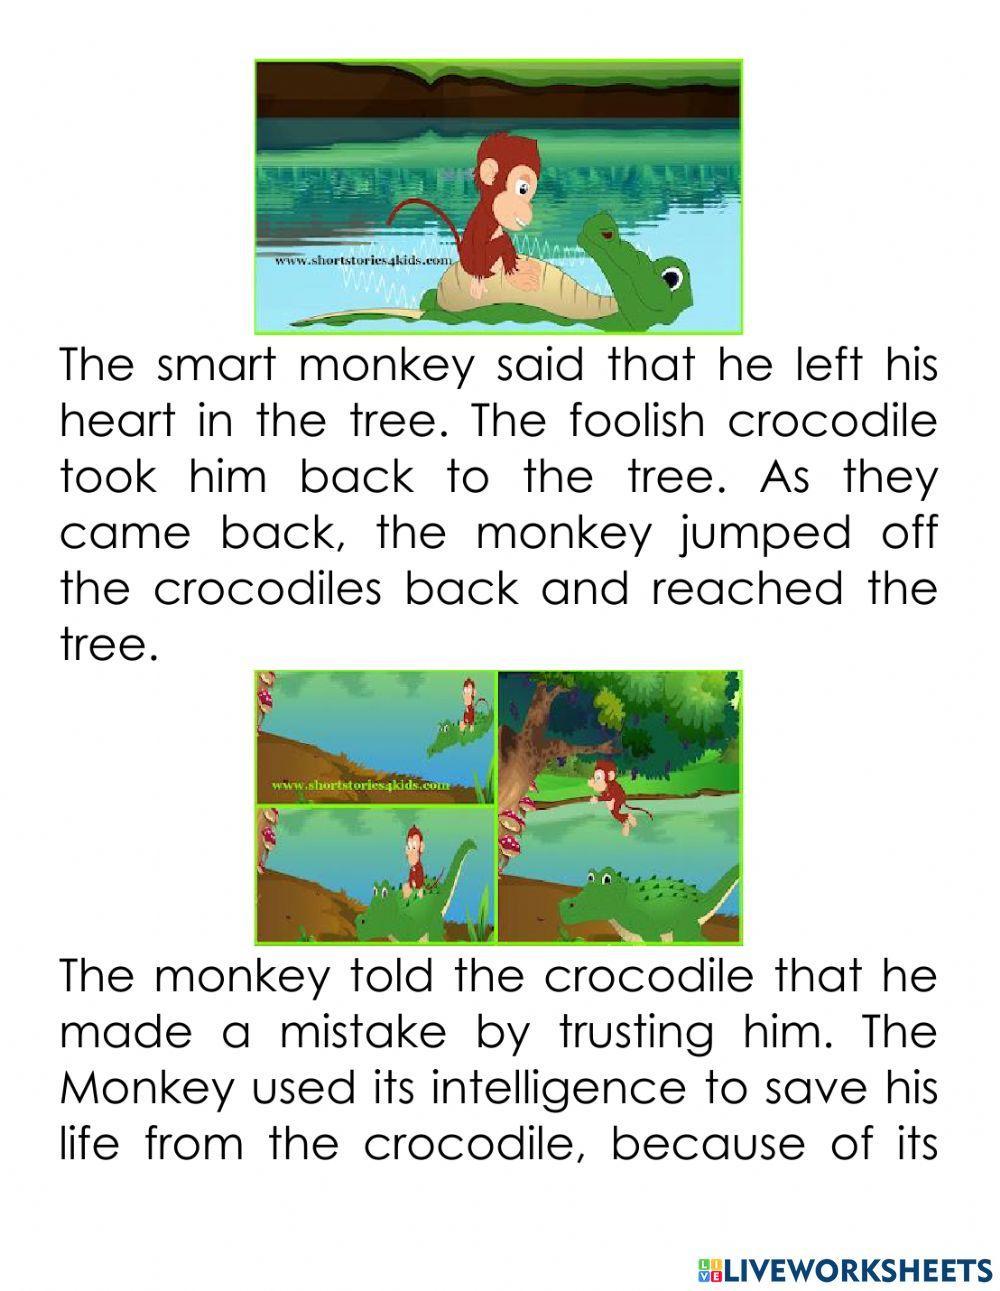 The Monkey and The Crocodile